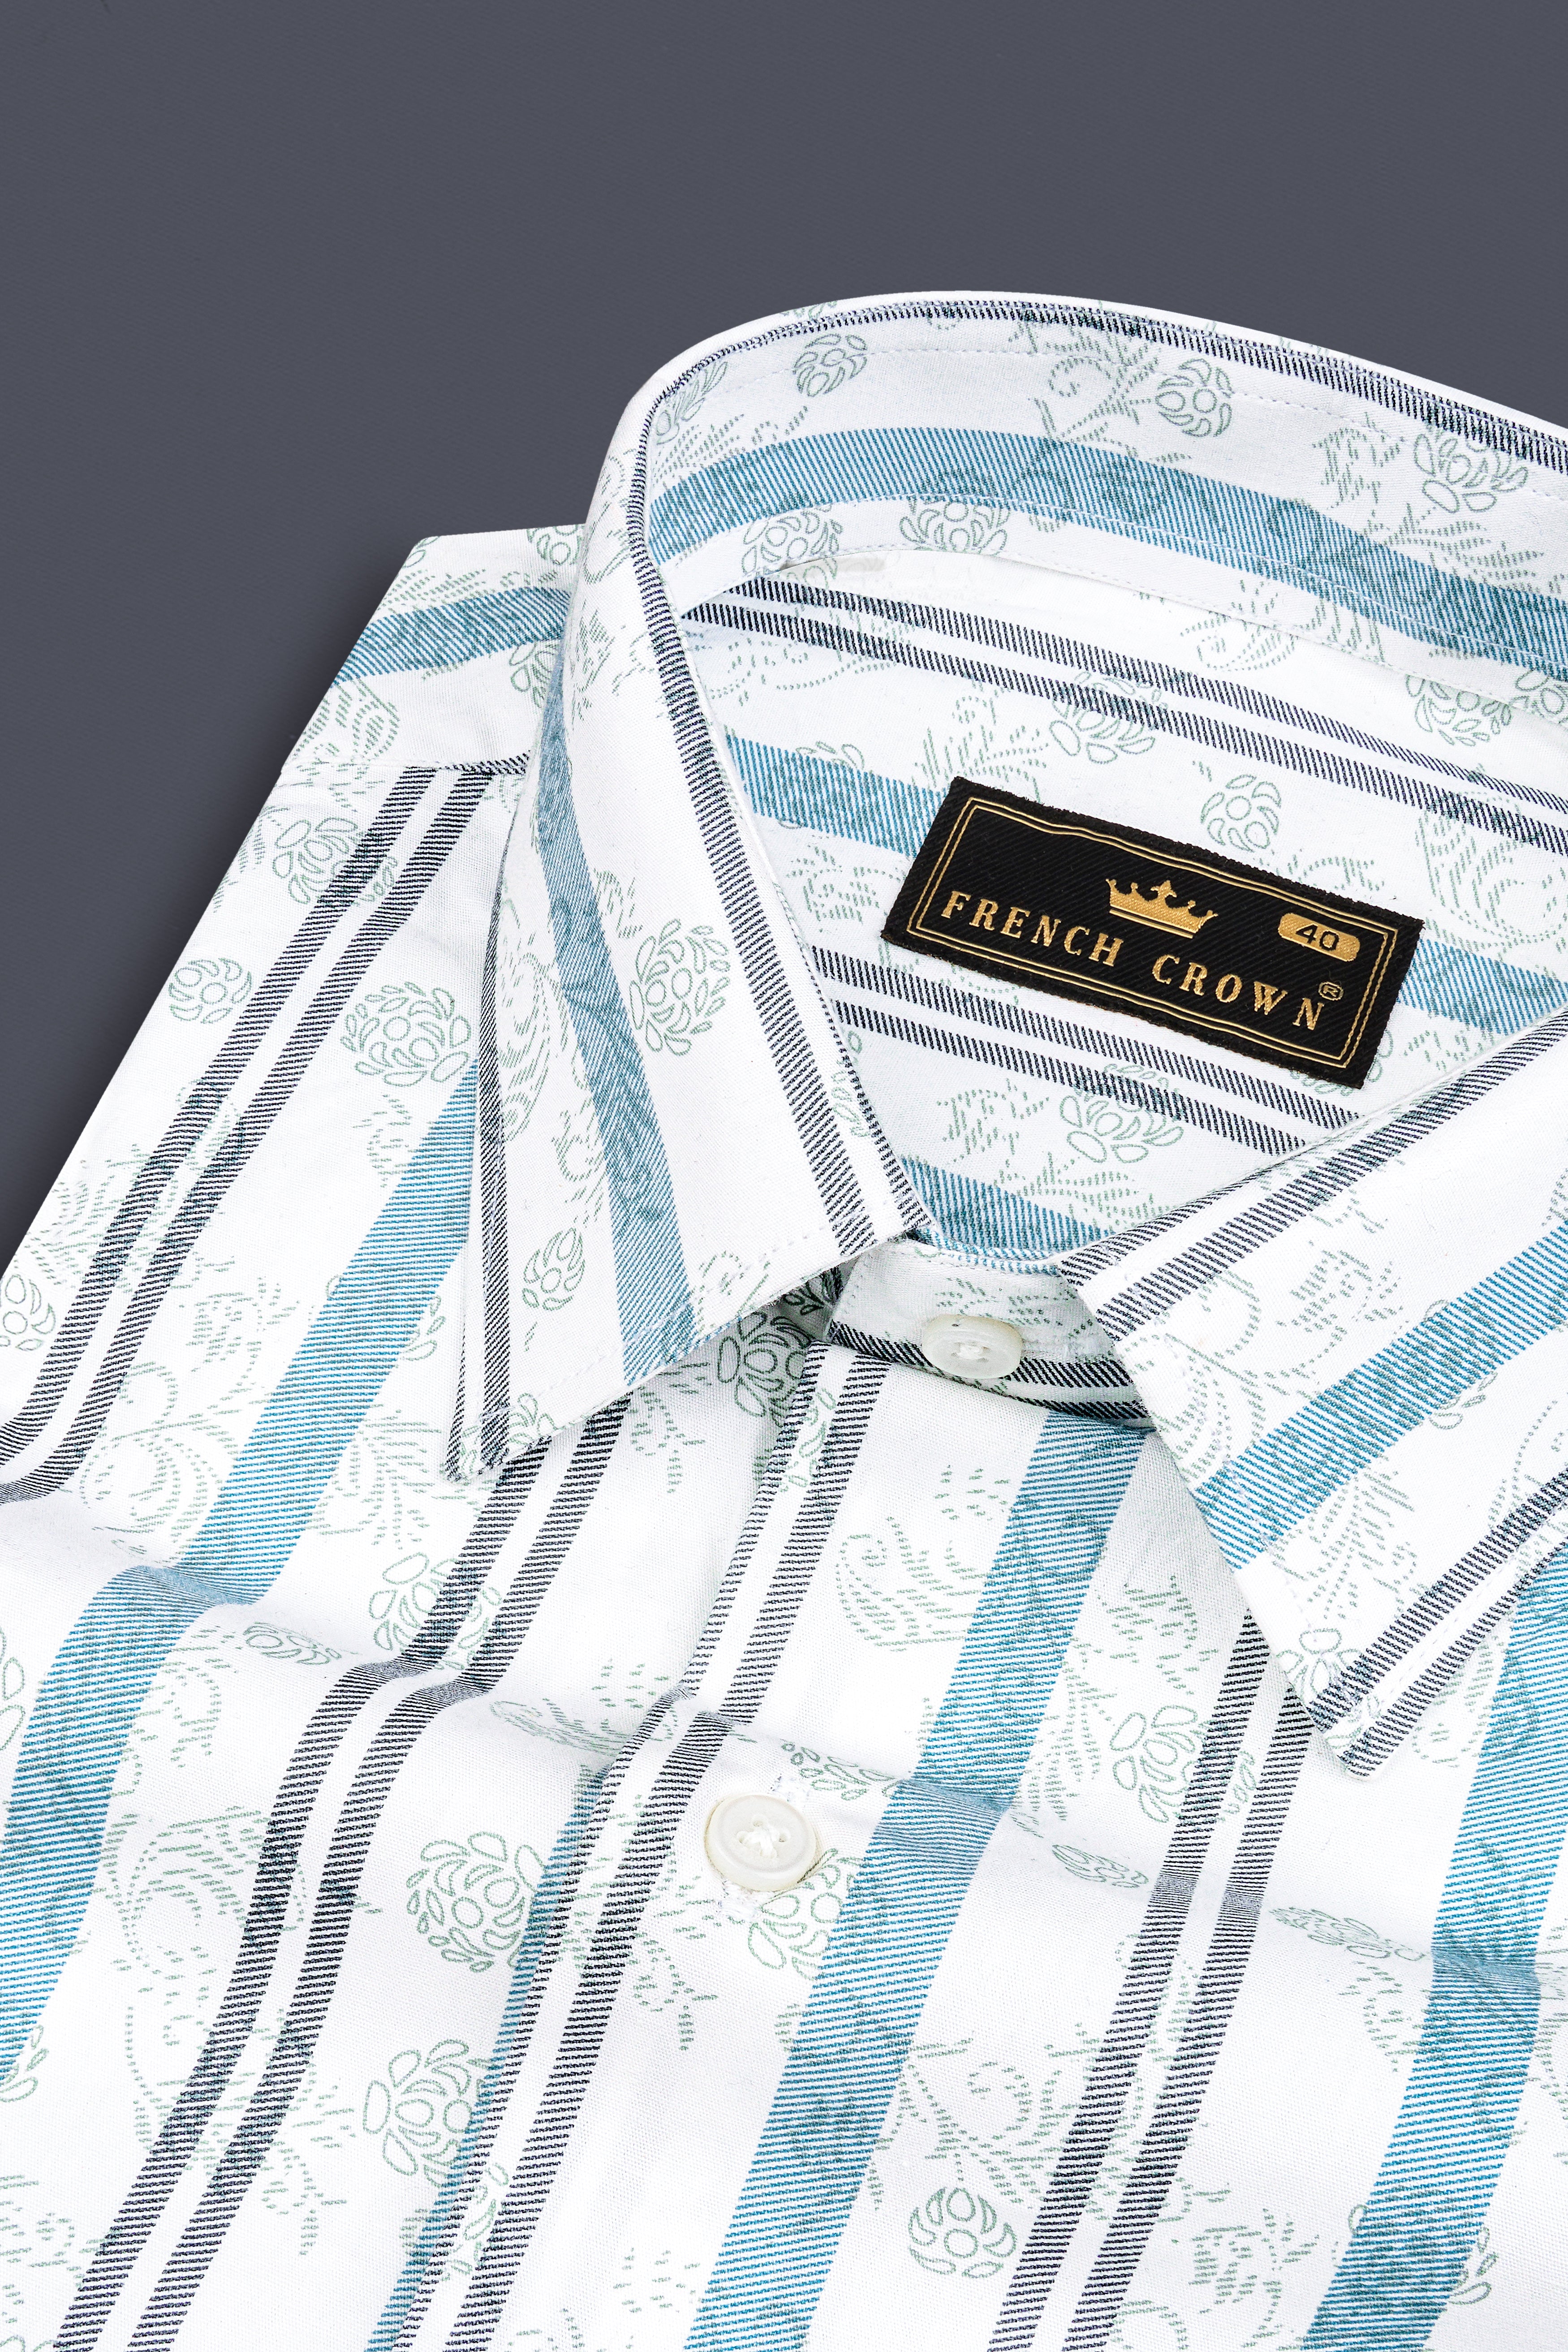 Bright white And Opaque Blue Subtle Sheen Striped Super Soft Premium Cotton Shirt